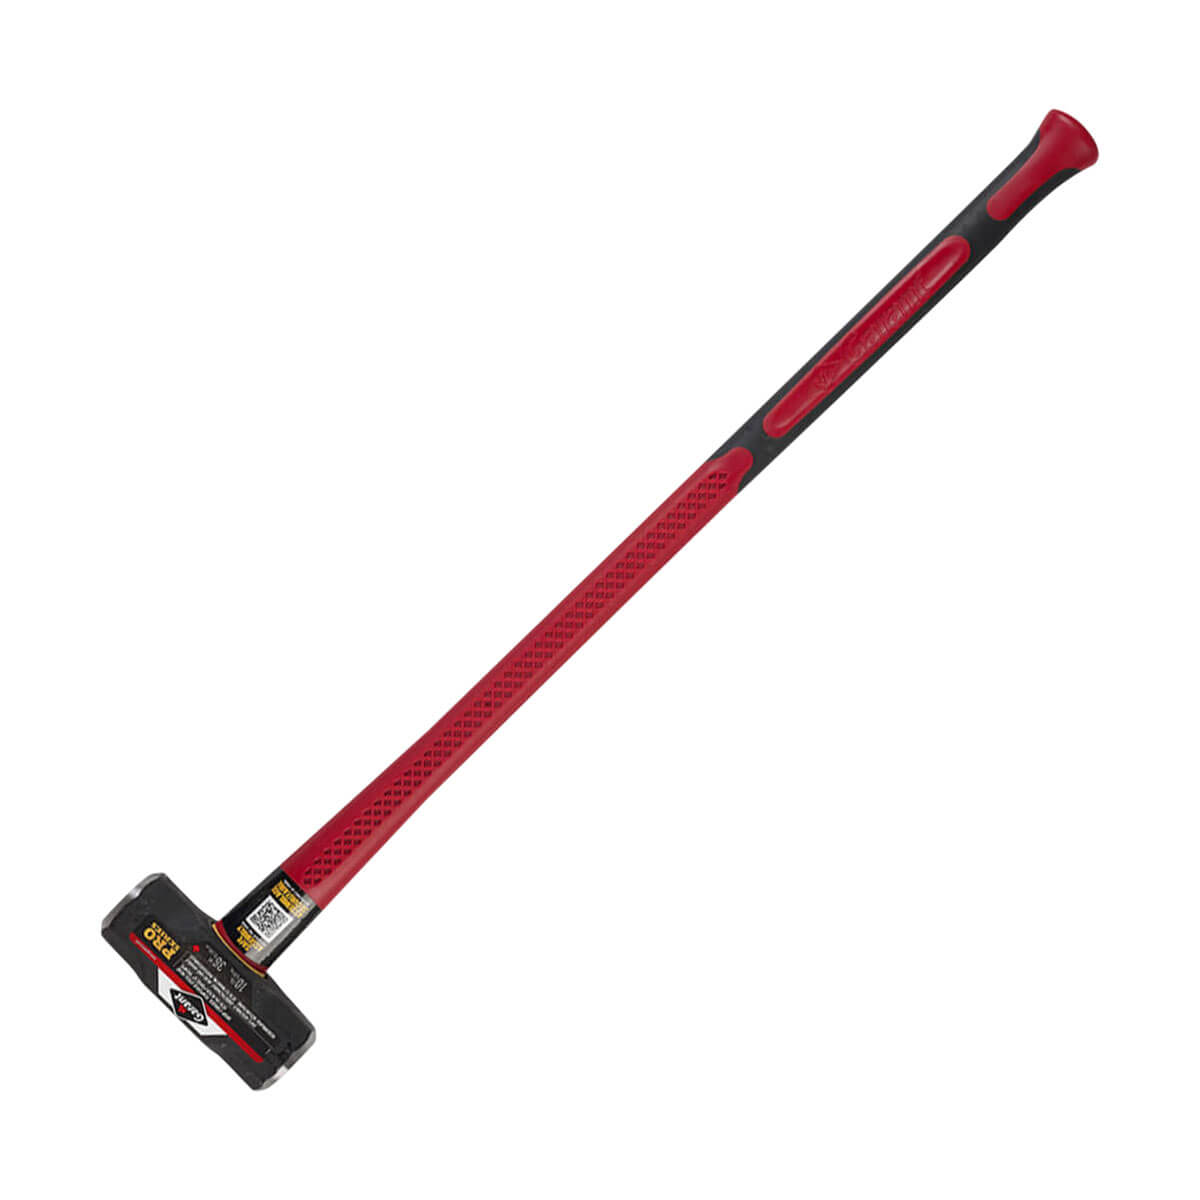 Sledge Hammer - 36-in - 10 lb